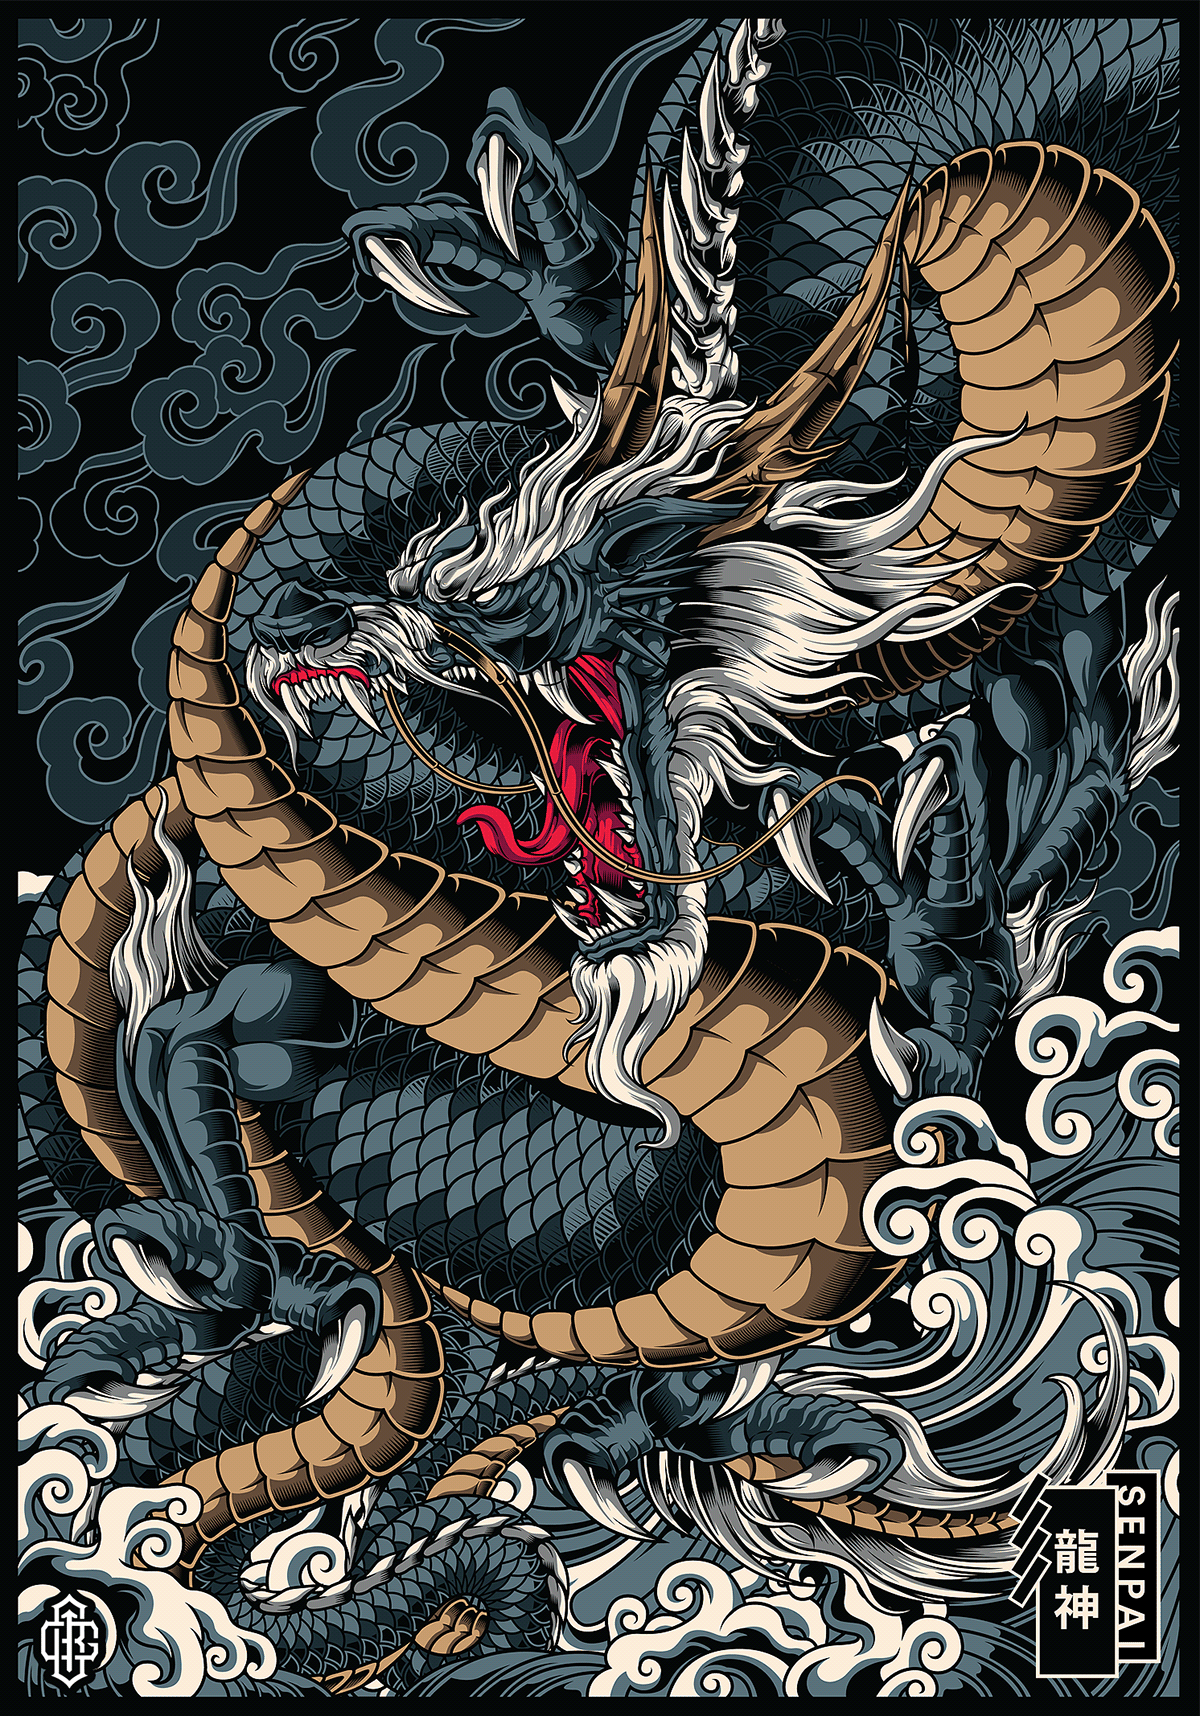 DRAGON RYUJIN. God of the Sea. Commission Project. Dragon tattoo art, Dragon illustration, Dragon artwork